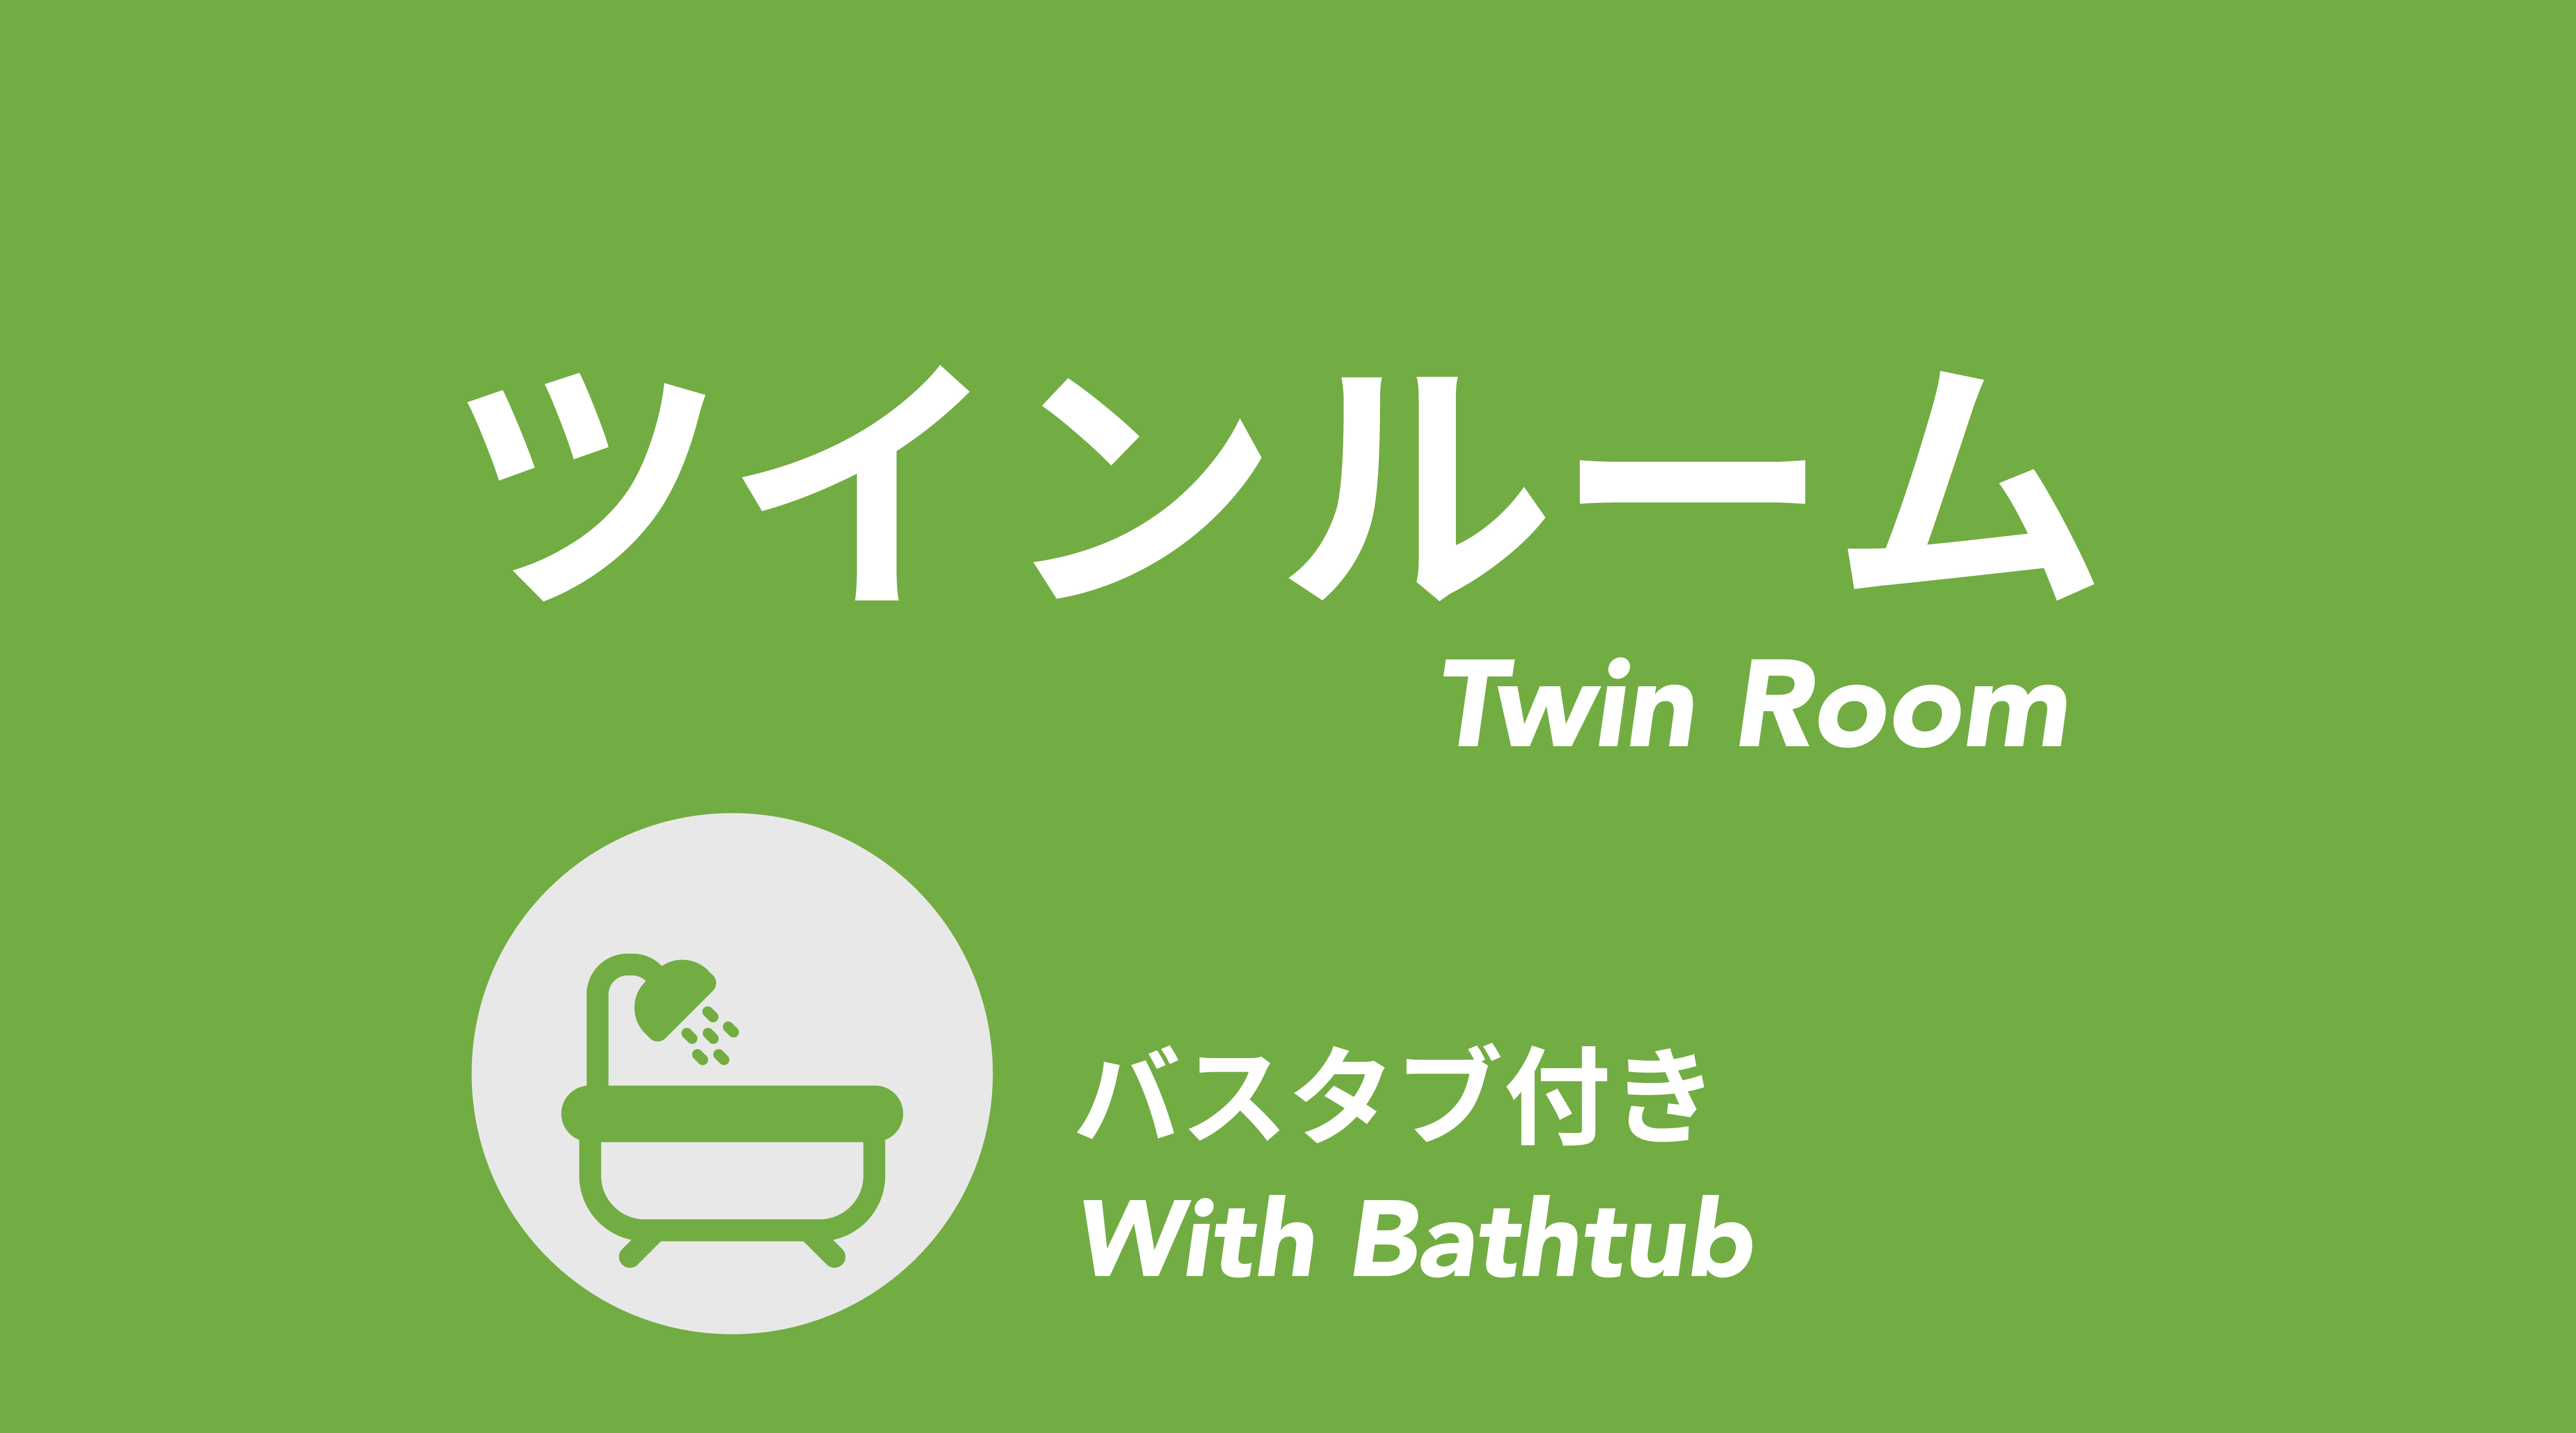 Twin Room with Bathtub